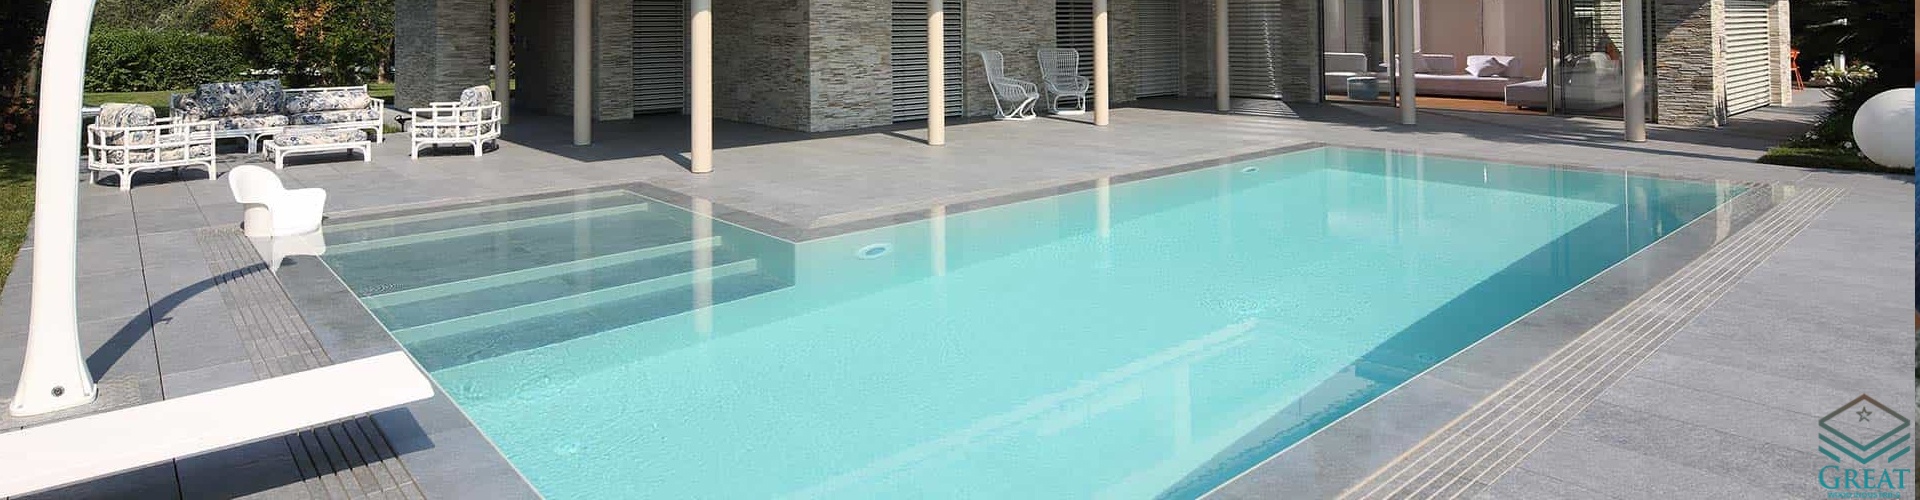 گریت کابینت | شرکت کابینت آشپزخانه گریت | swimming pool renovation in javea